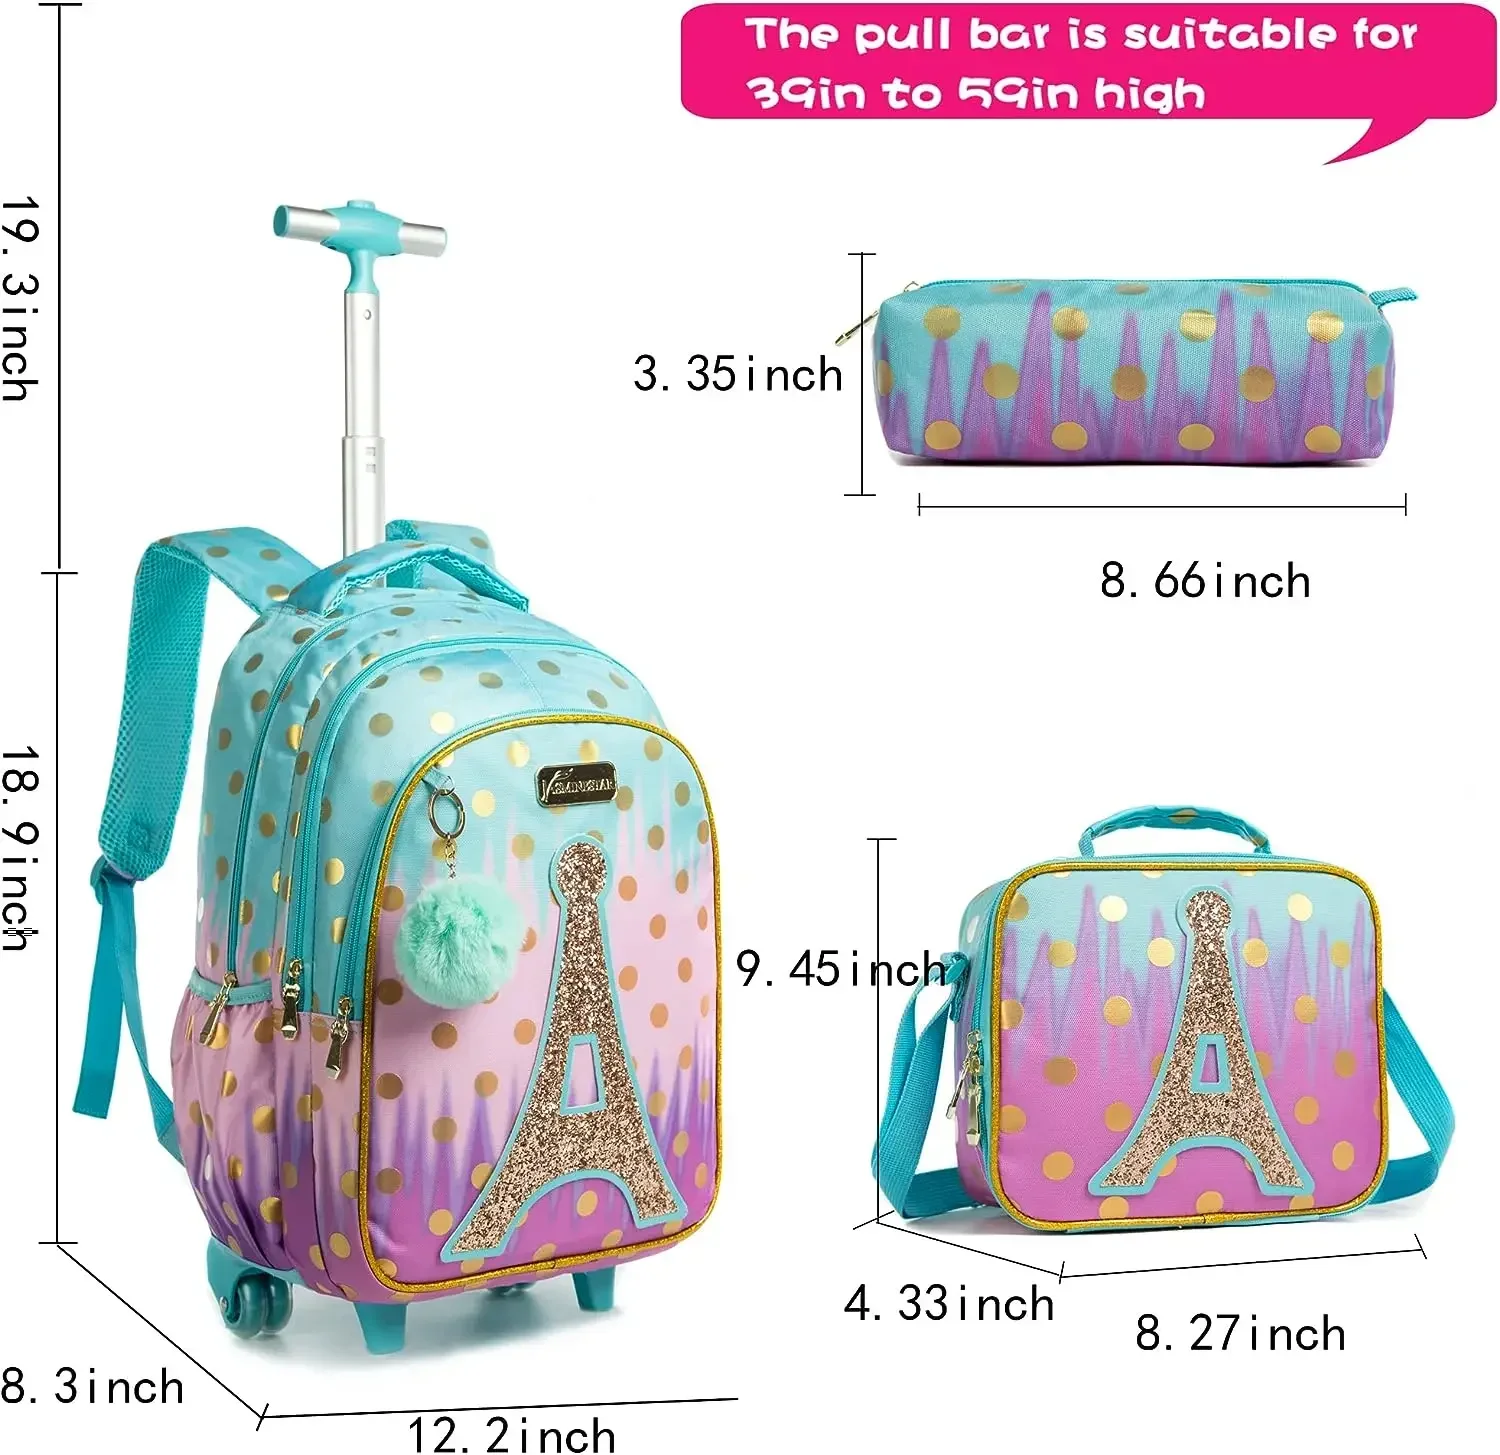 Children's School Backpack with Wheels Kids Wheeled School Bag Teenagers Bag Girls Canvas Backpack Travel Luggage Trolley Bags